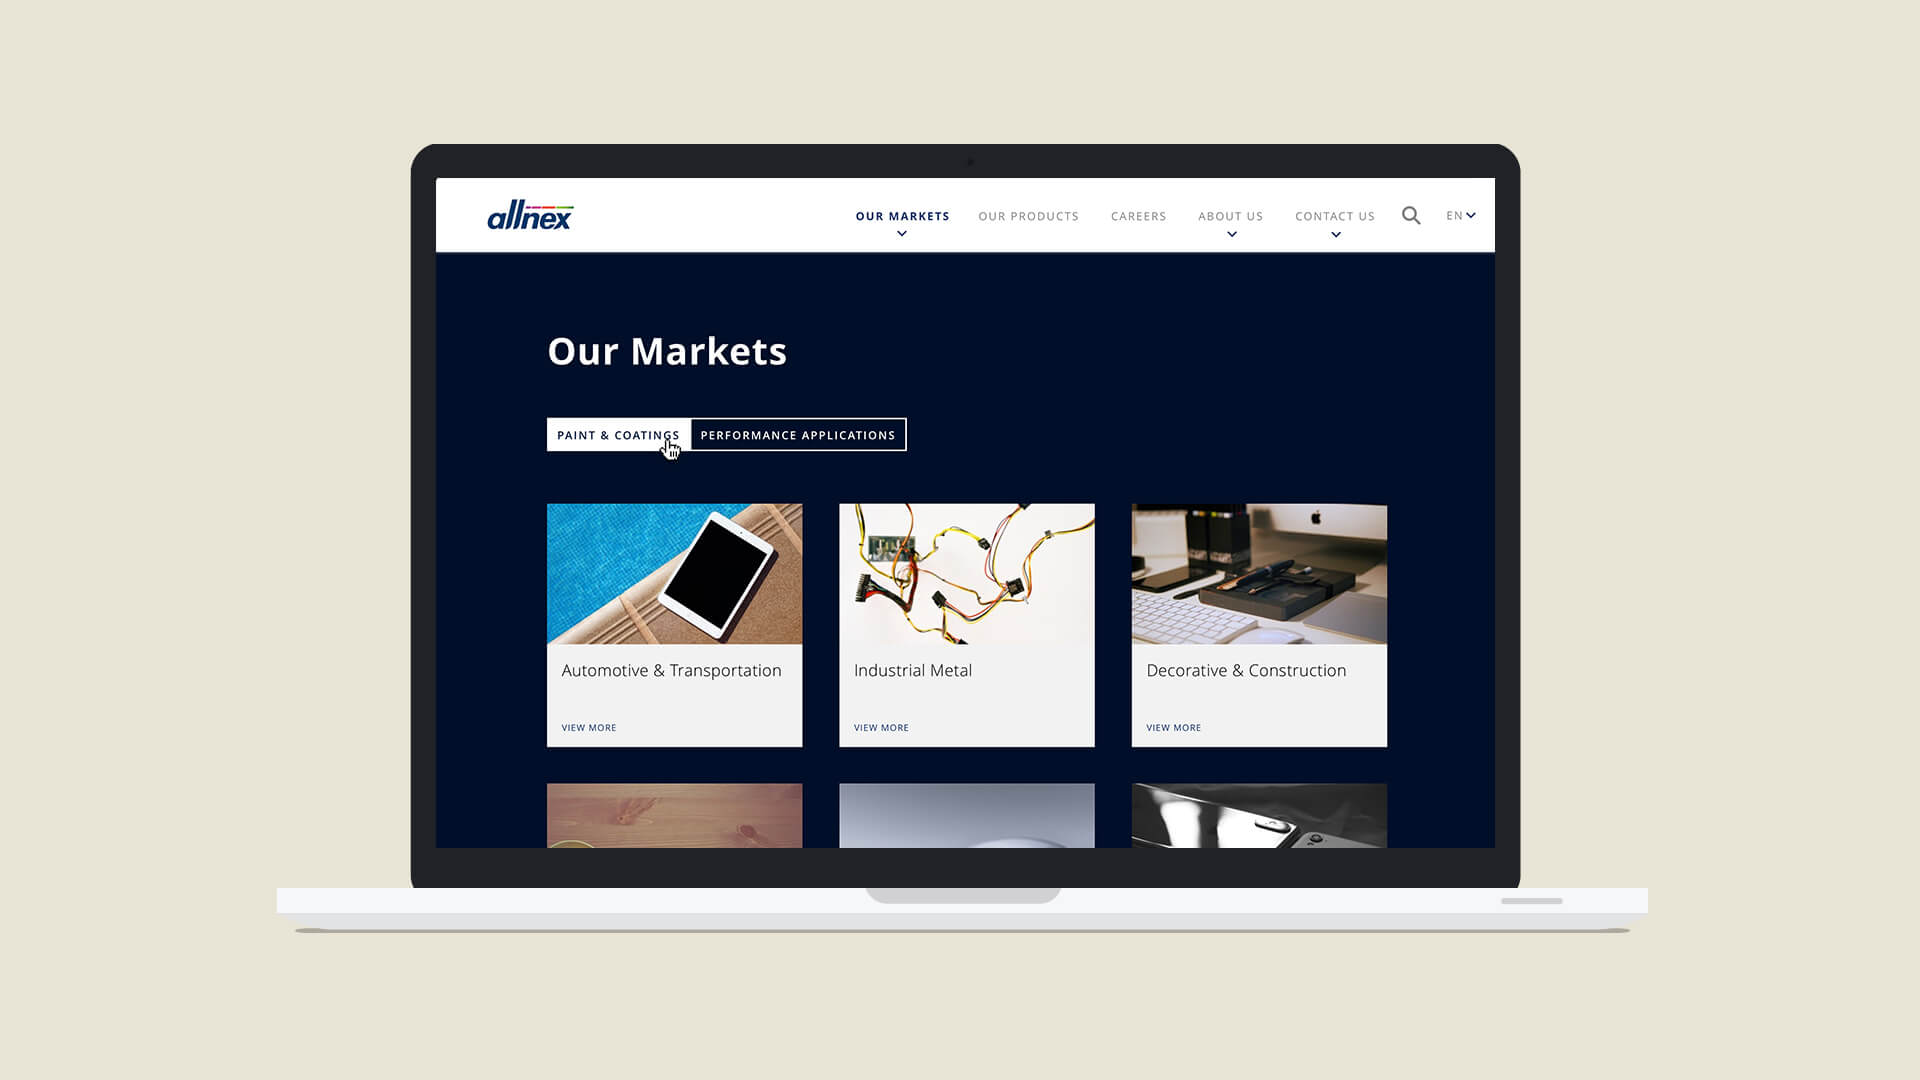 Allnex website - Our Markets page